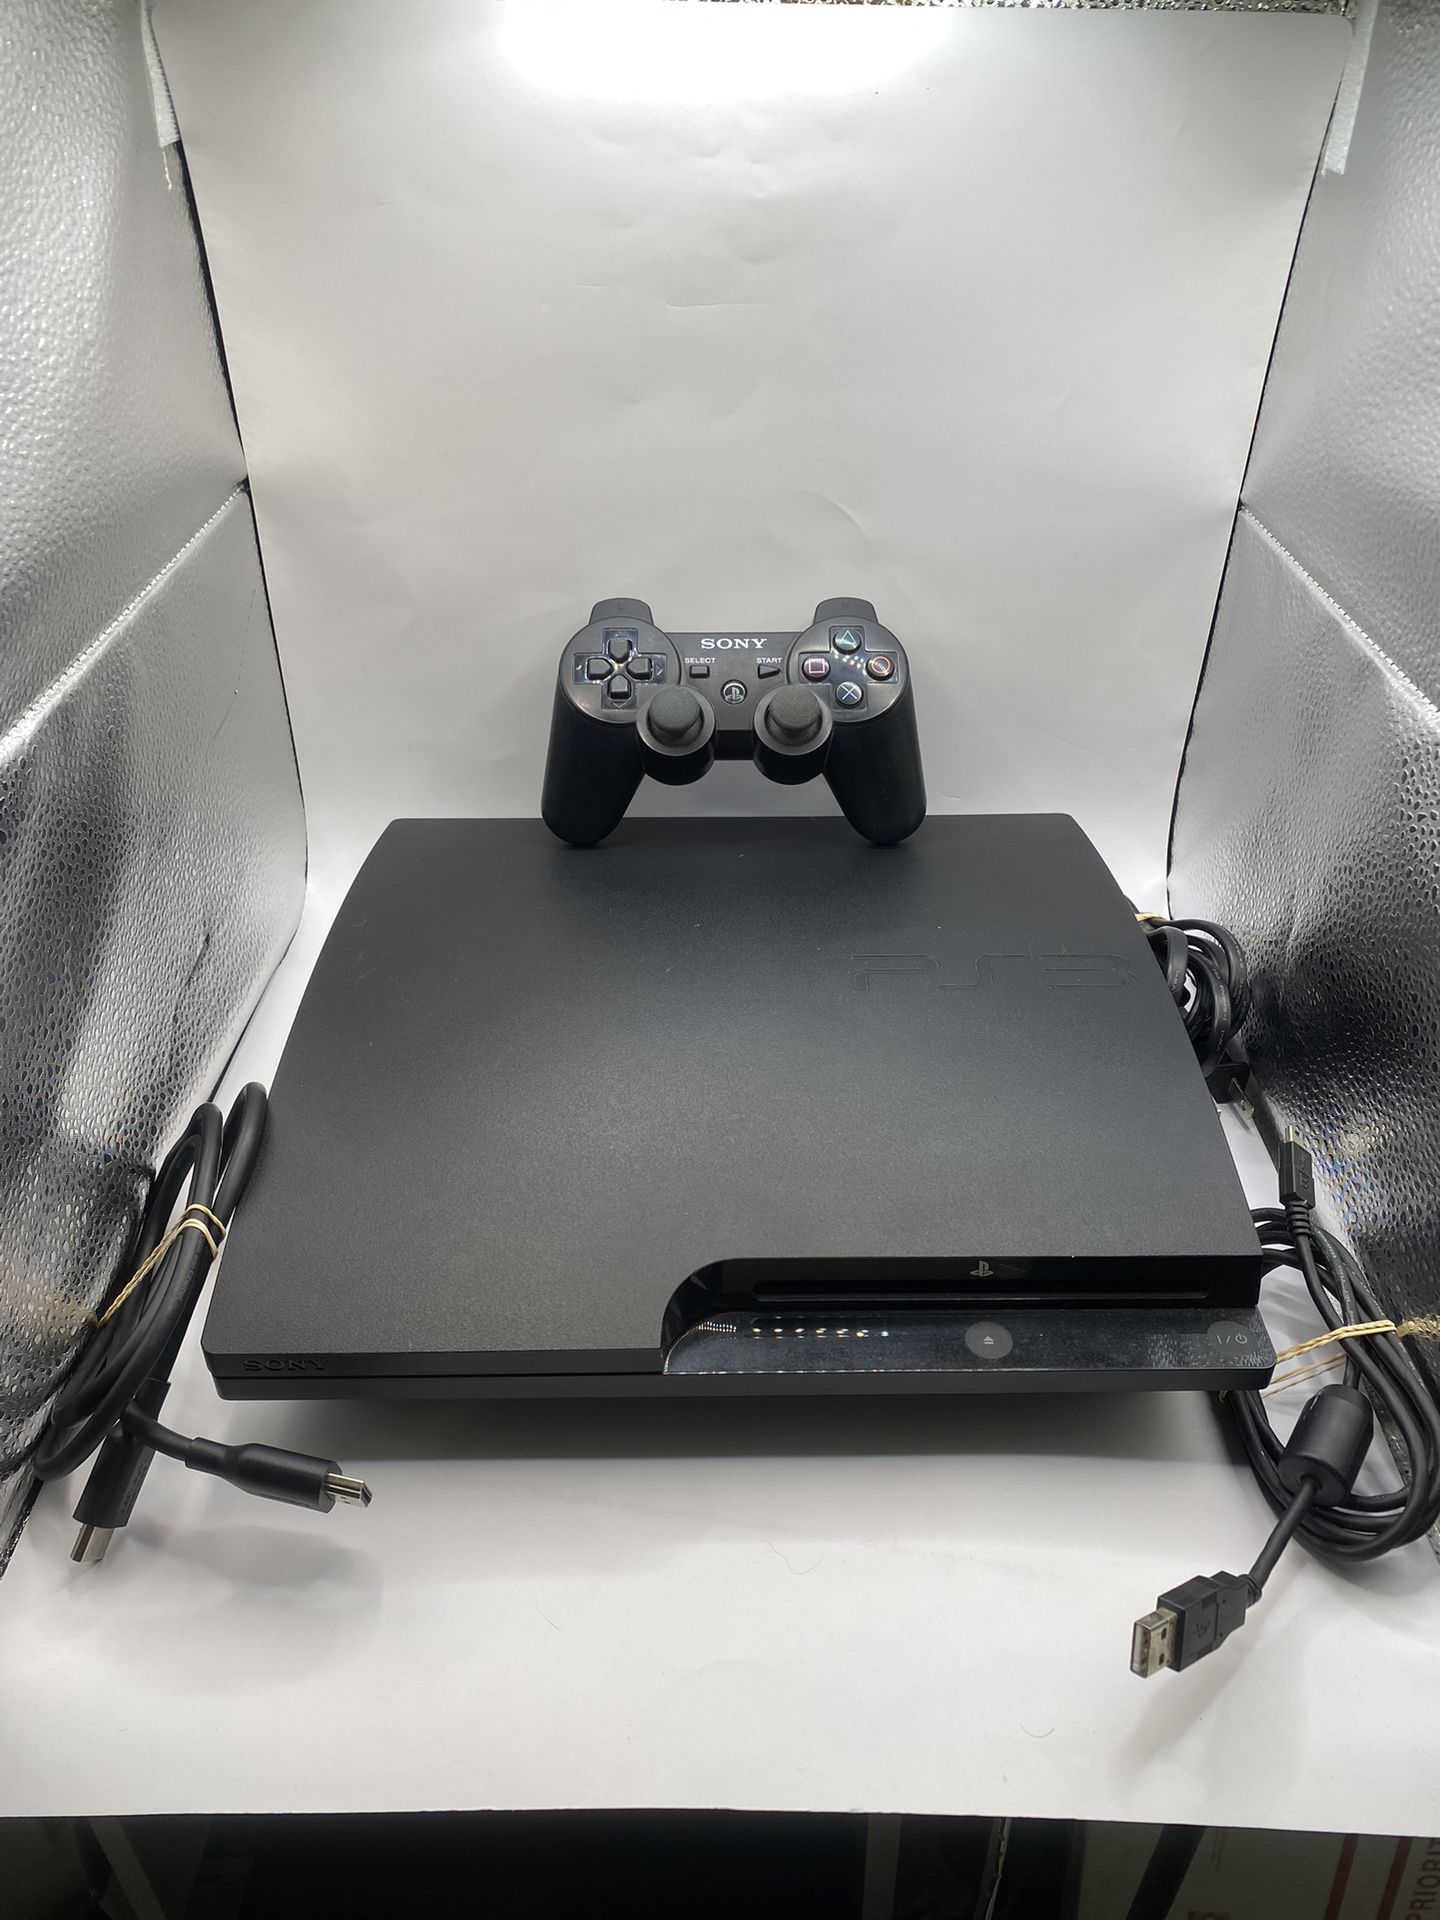 Sony PlayStation 3 PS3 Slim Console CECH-3001B 320GB W Controller & Cords OEM HDMI 